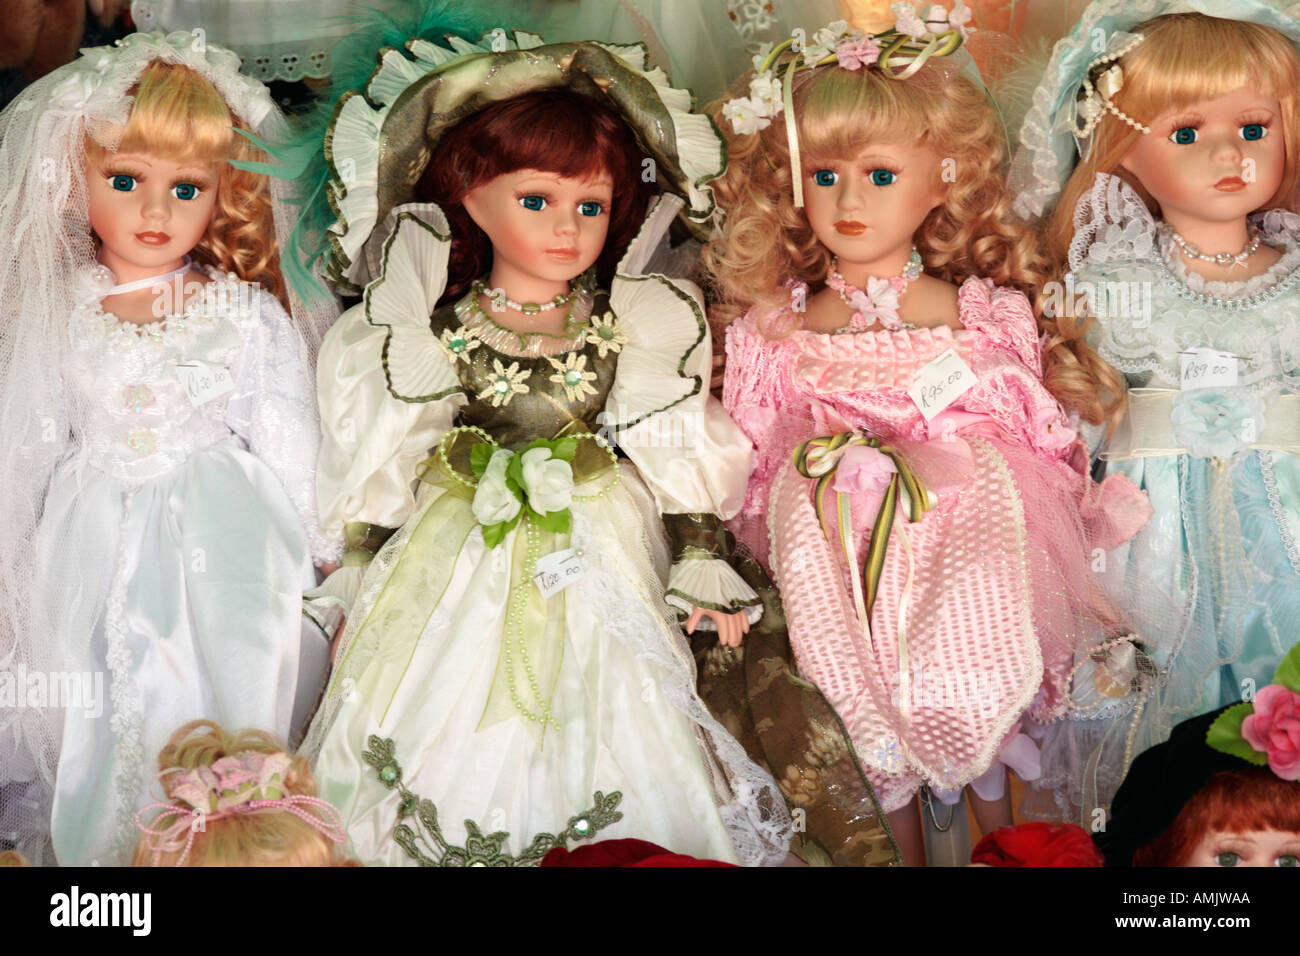 Four Porcelain dolls in shop window Stock Photo